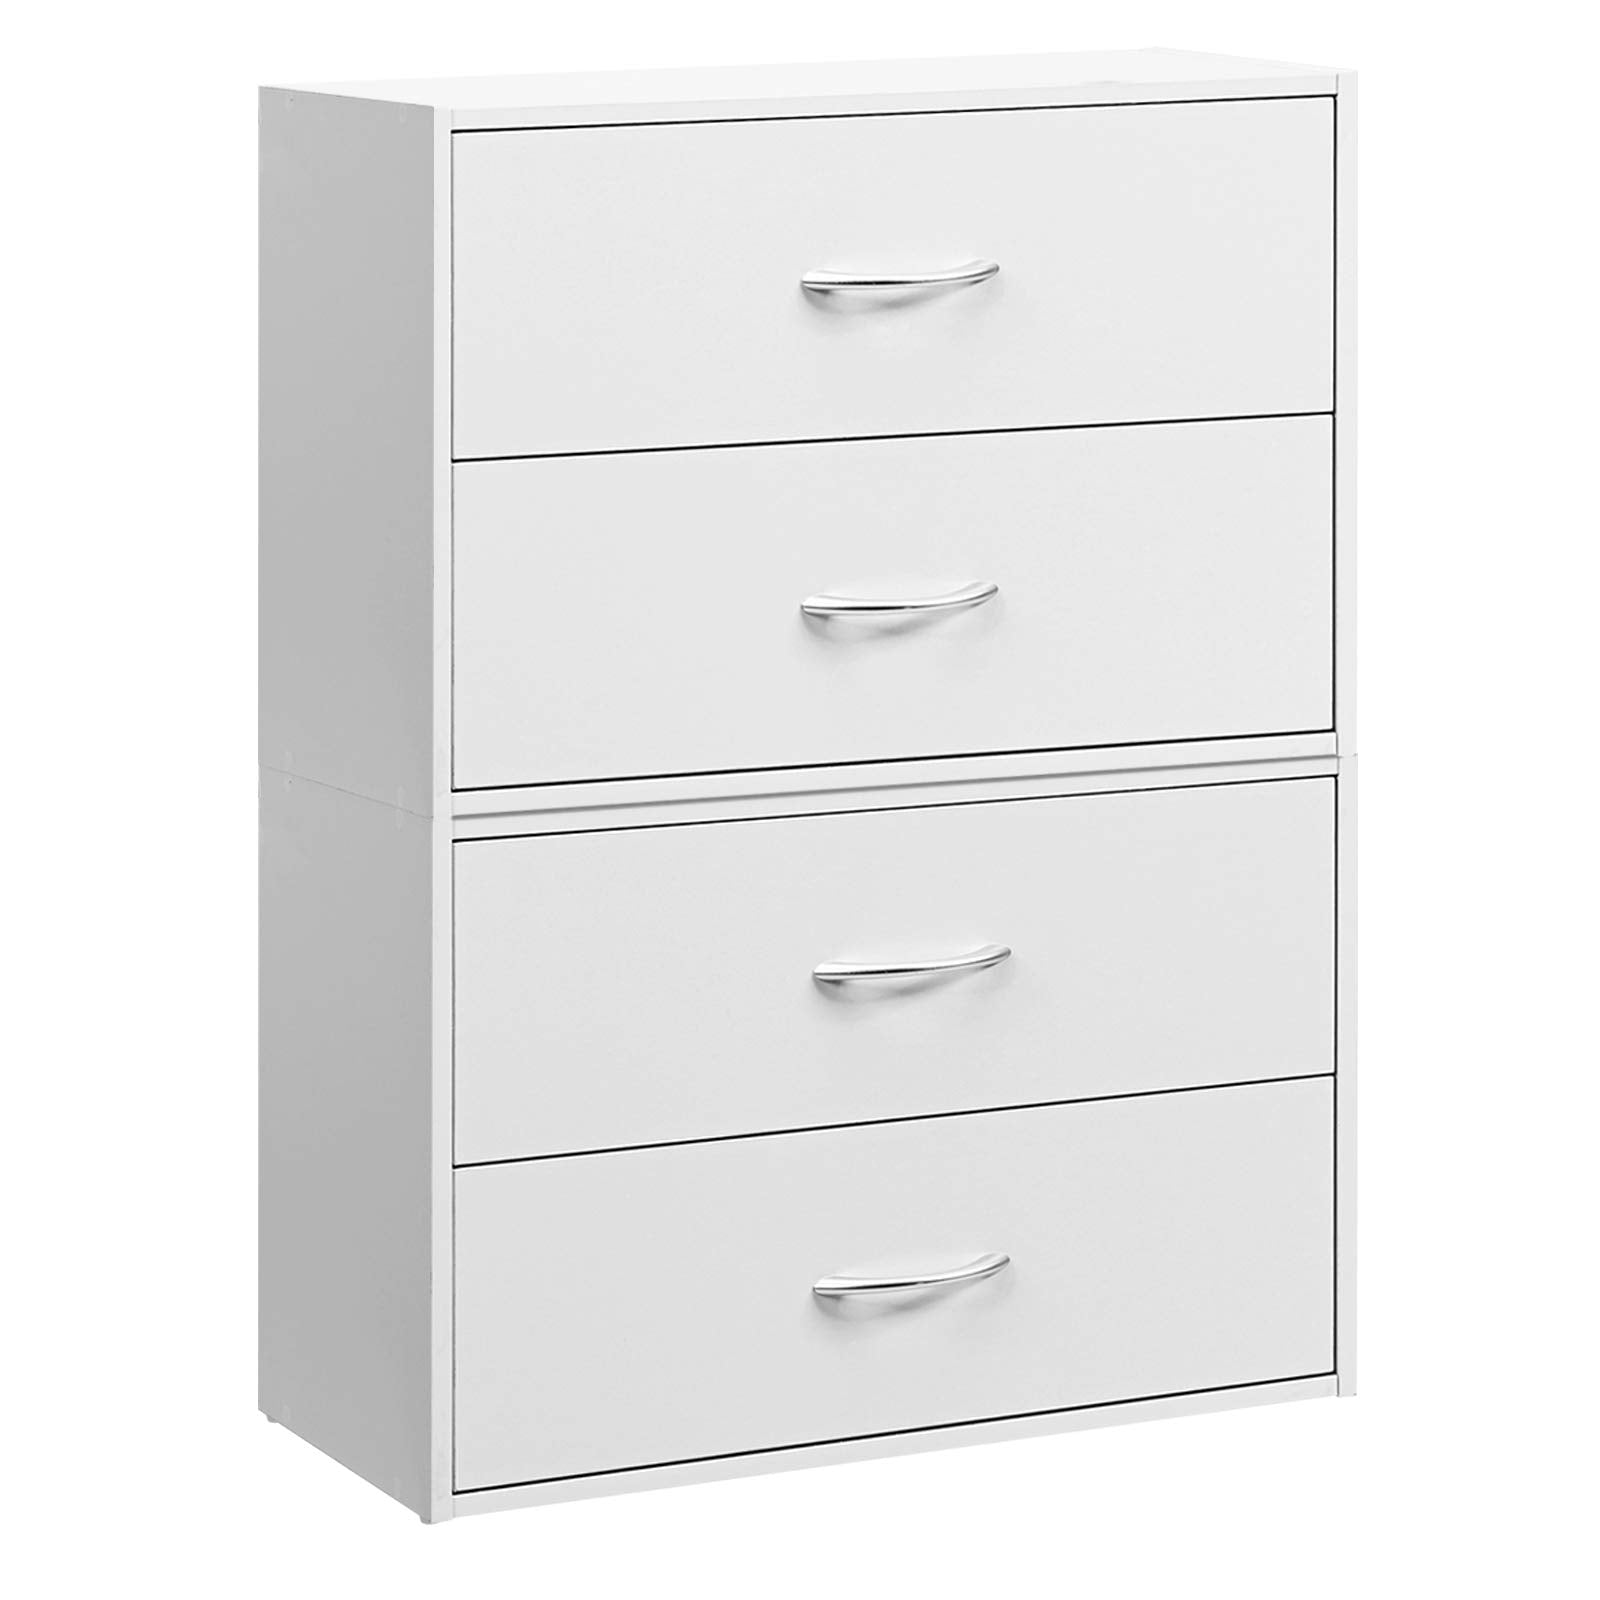 Giantex Dressers Stackable 2 Drawer Horiztonal Organizer W/Handles Dresser Tower, White